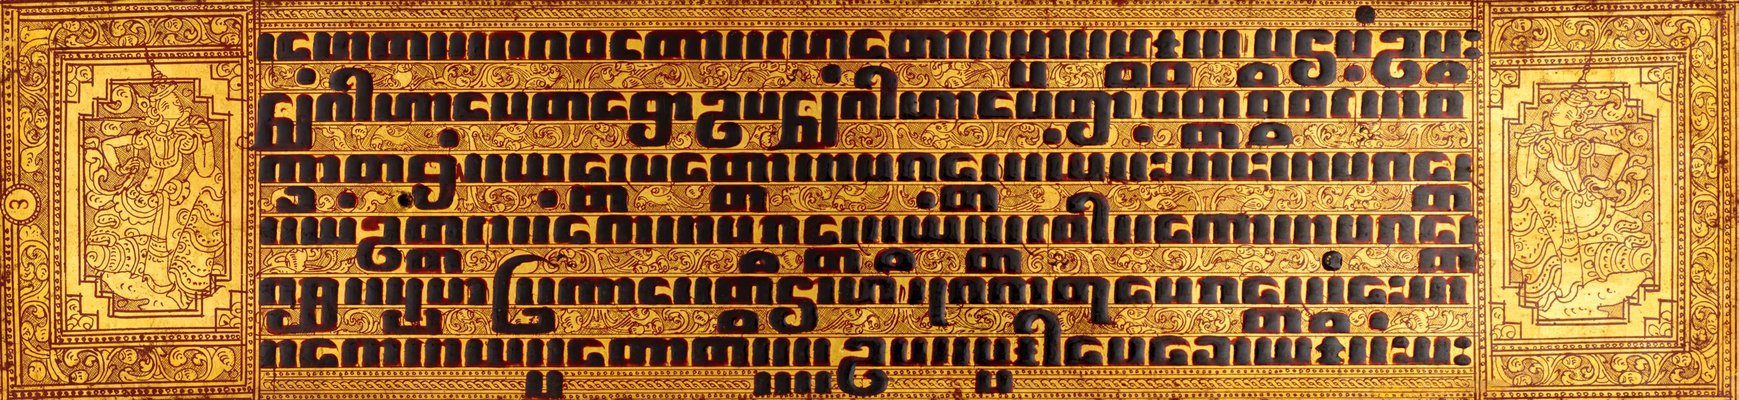 Alternate image of Kammawaza manuscript by 